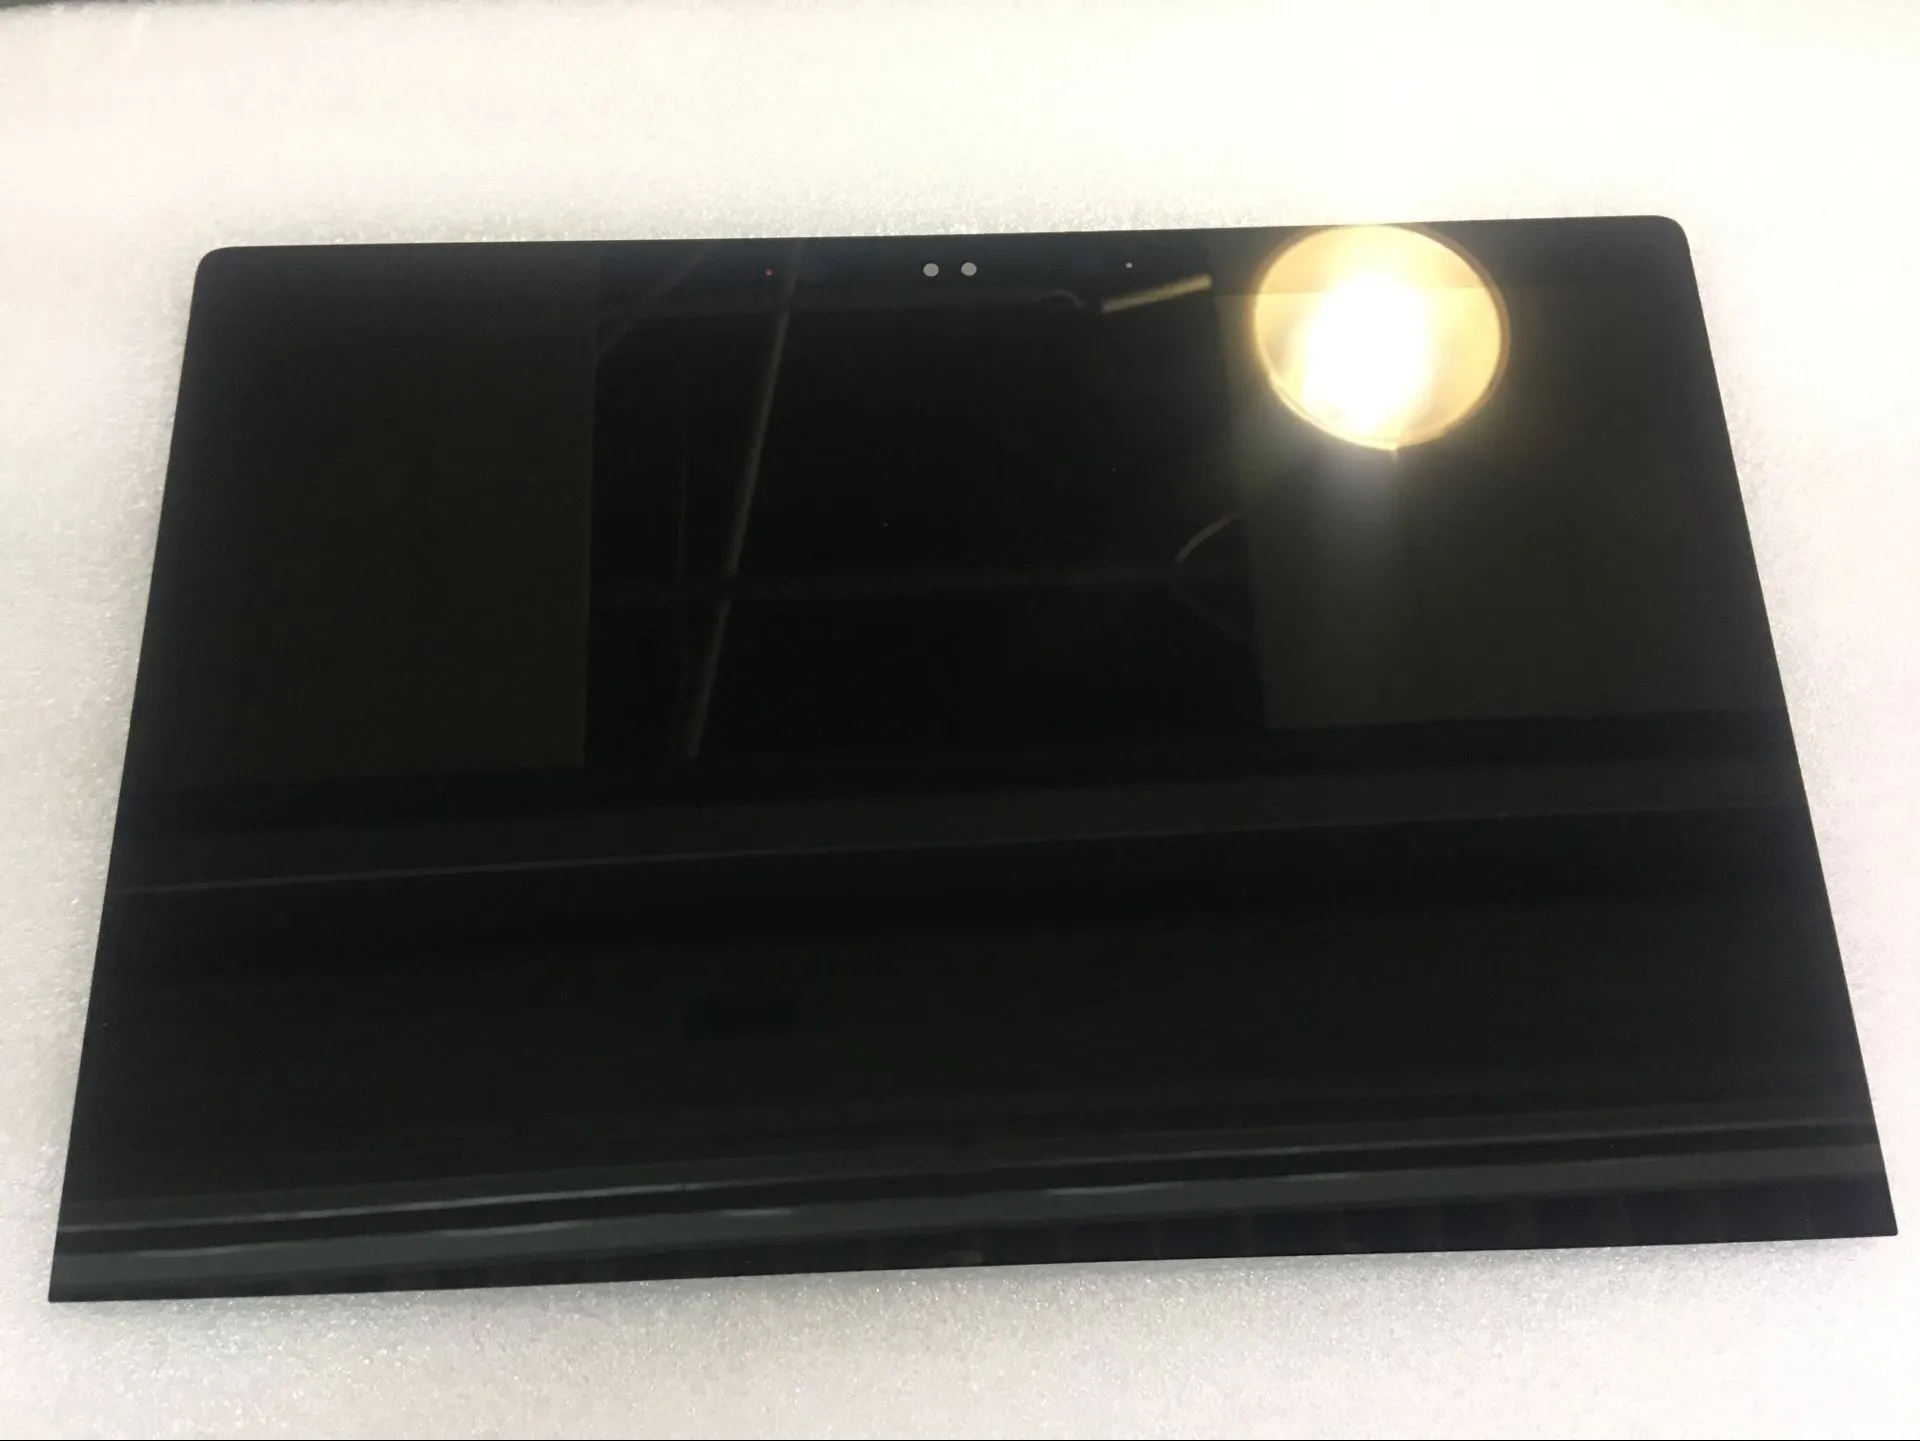 

ЖК-дисплей 13,3 дюйма для HP Spectre Pro x360 G1 G2 13-4000, сенсорный экран в сборе QHD 2160x1440 FHD x